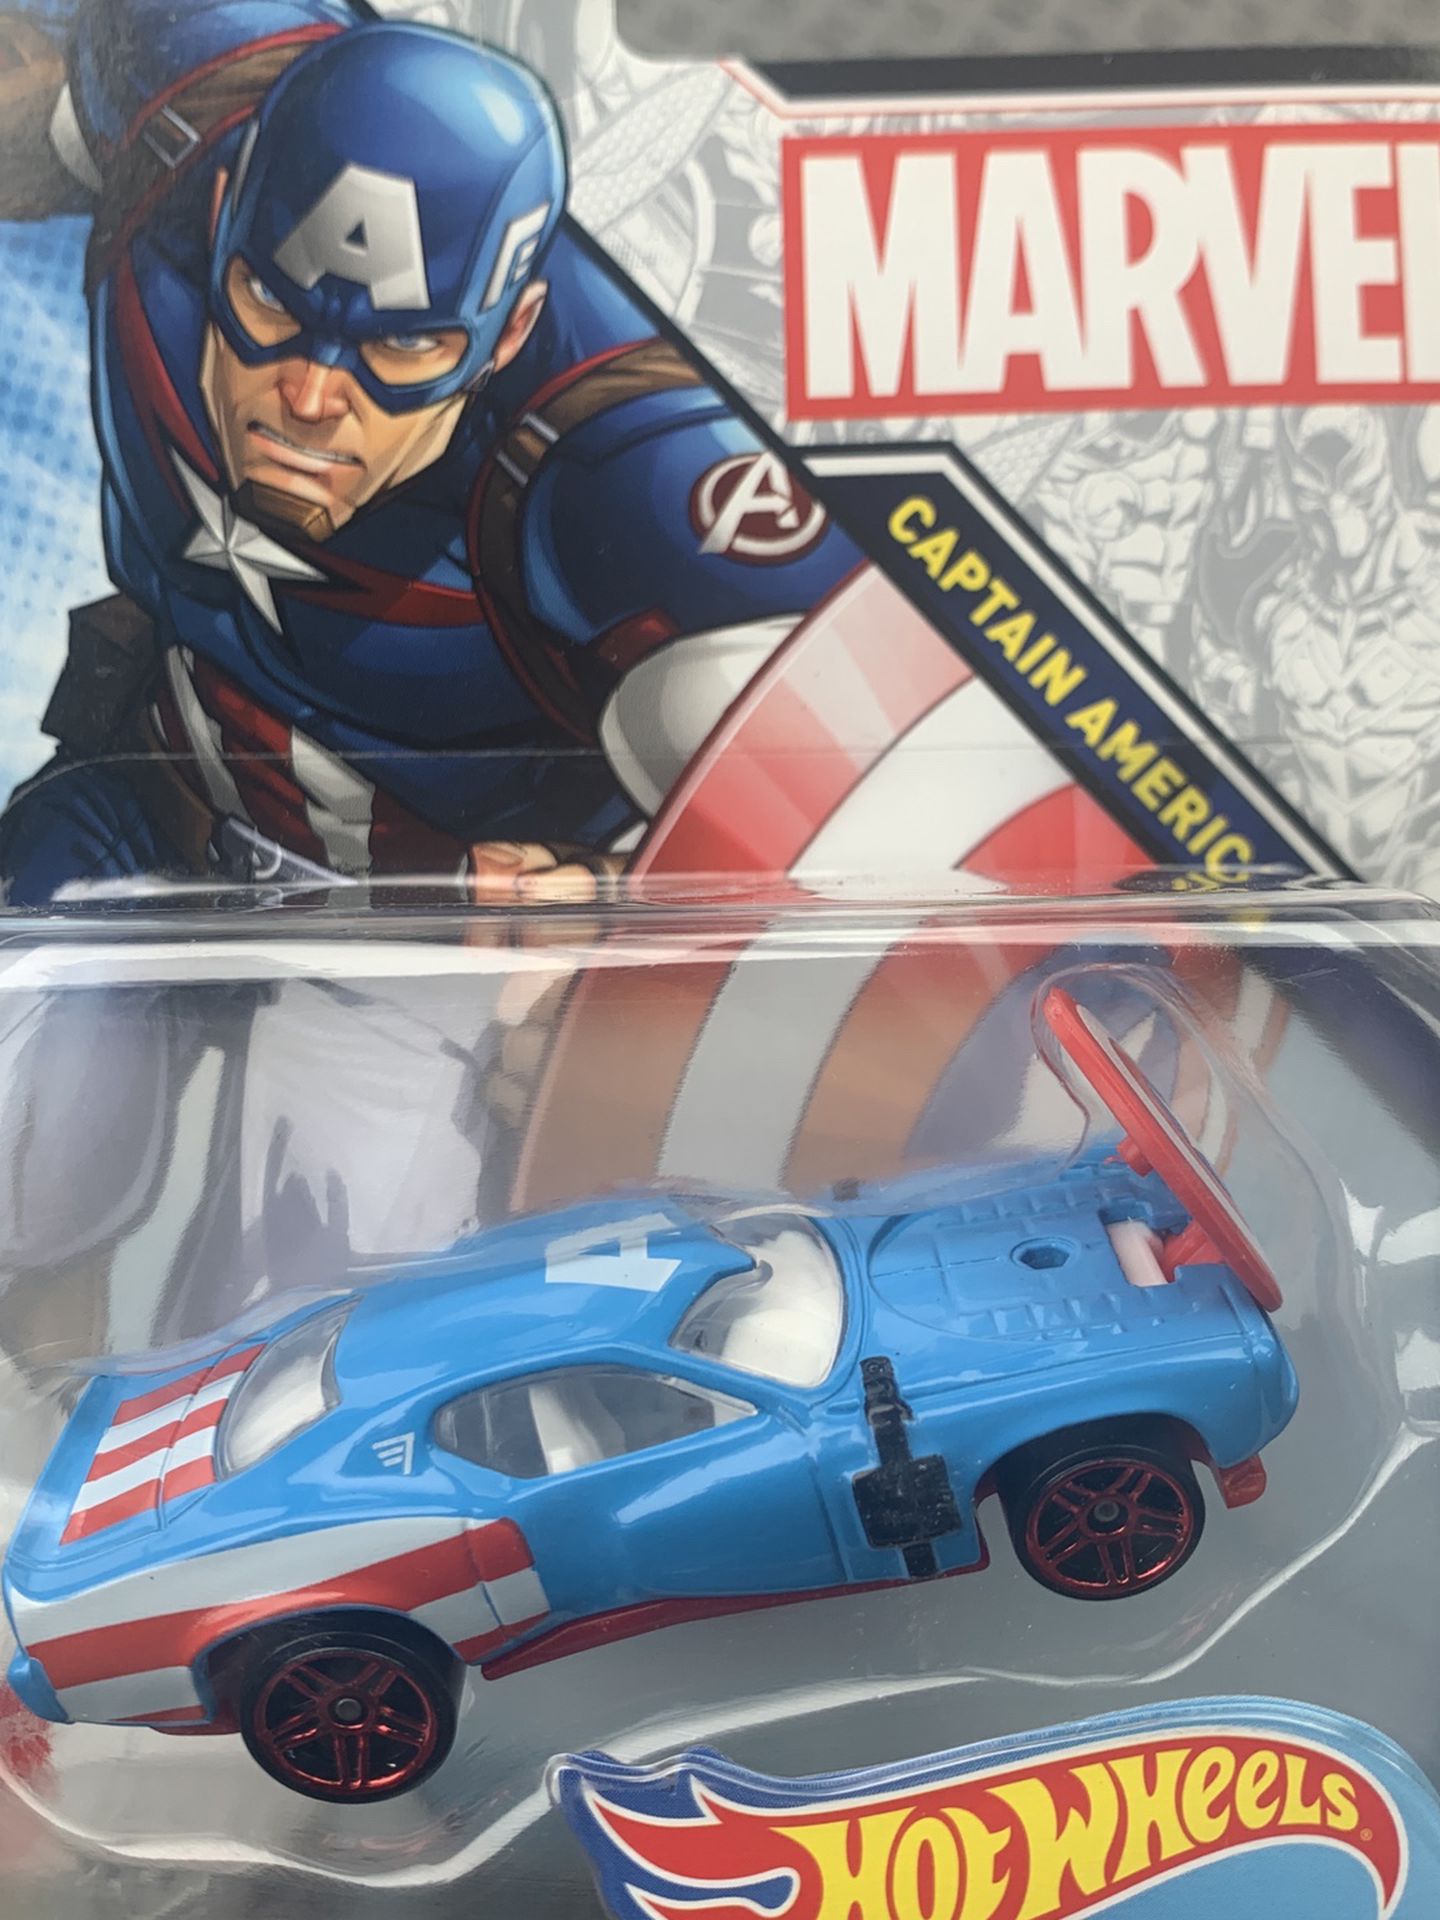 Captain America hot wheels car